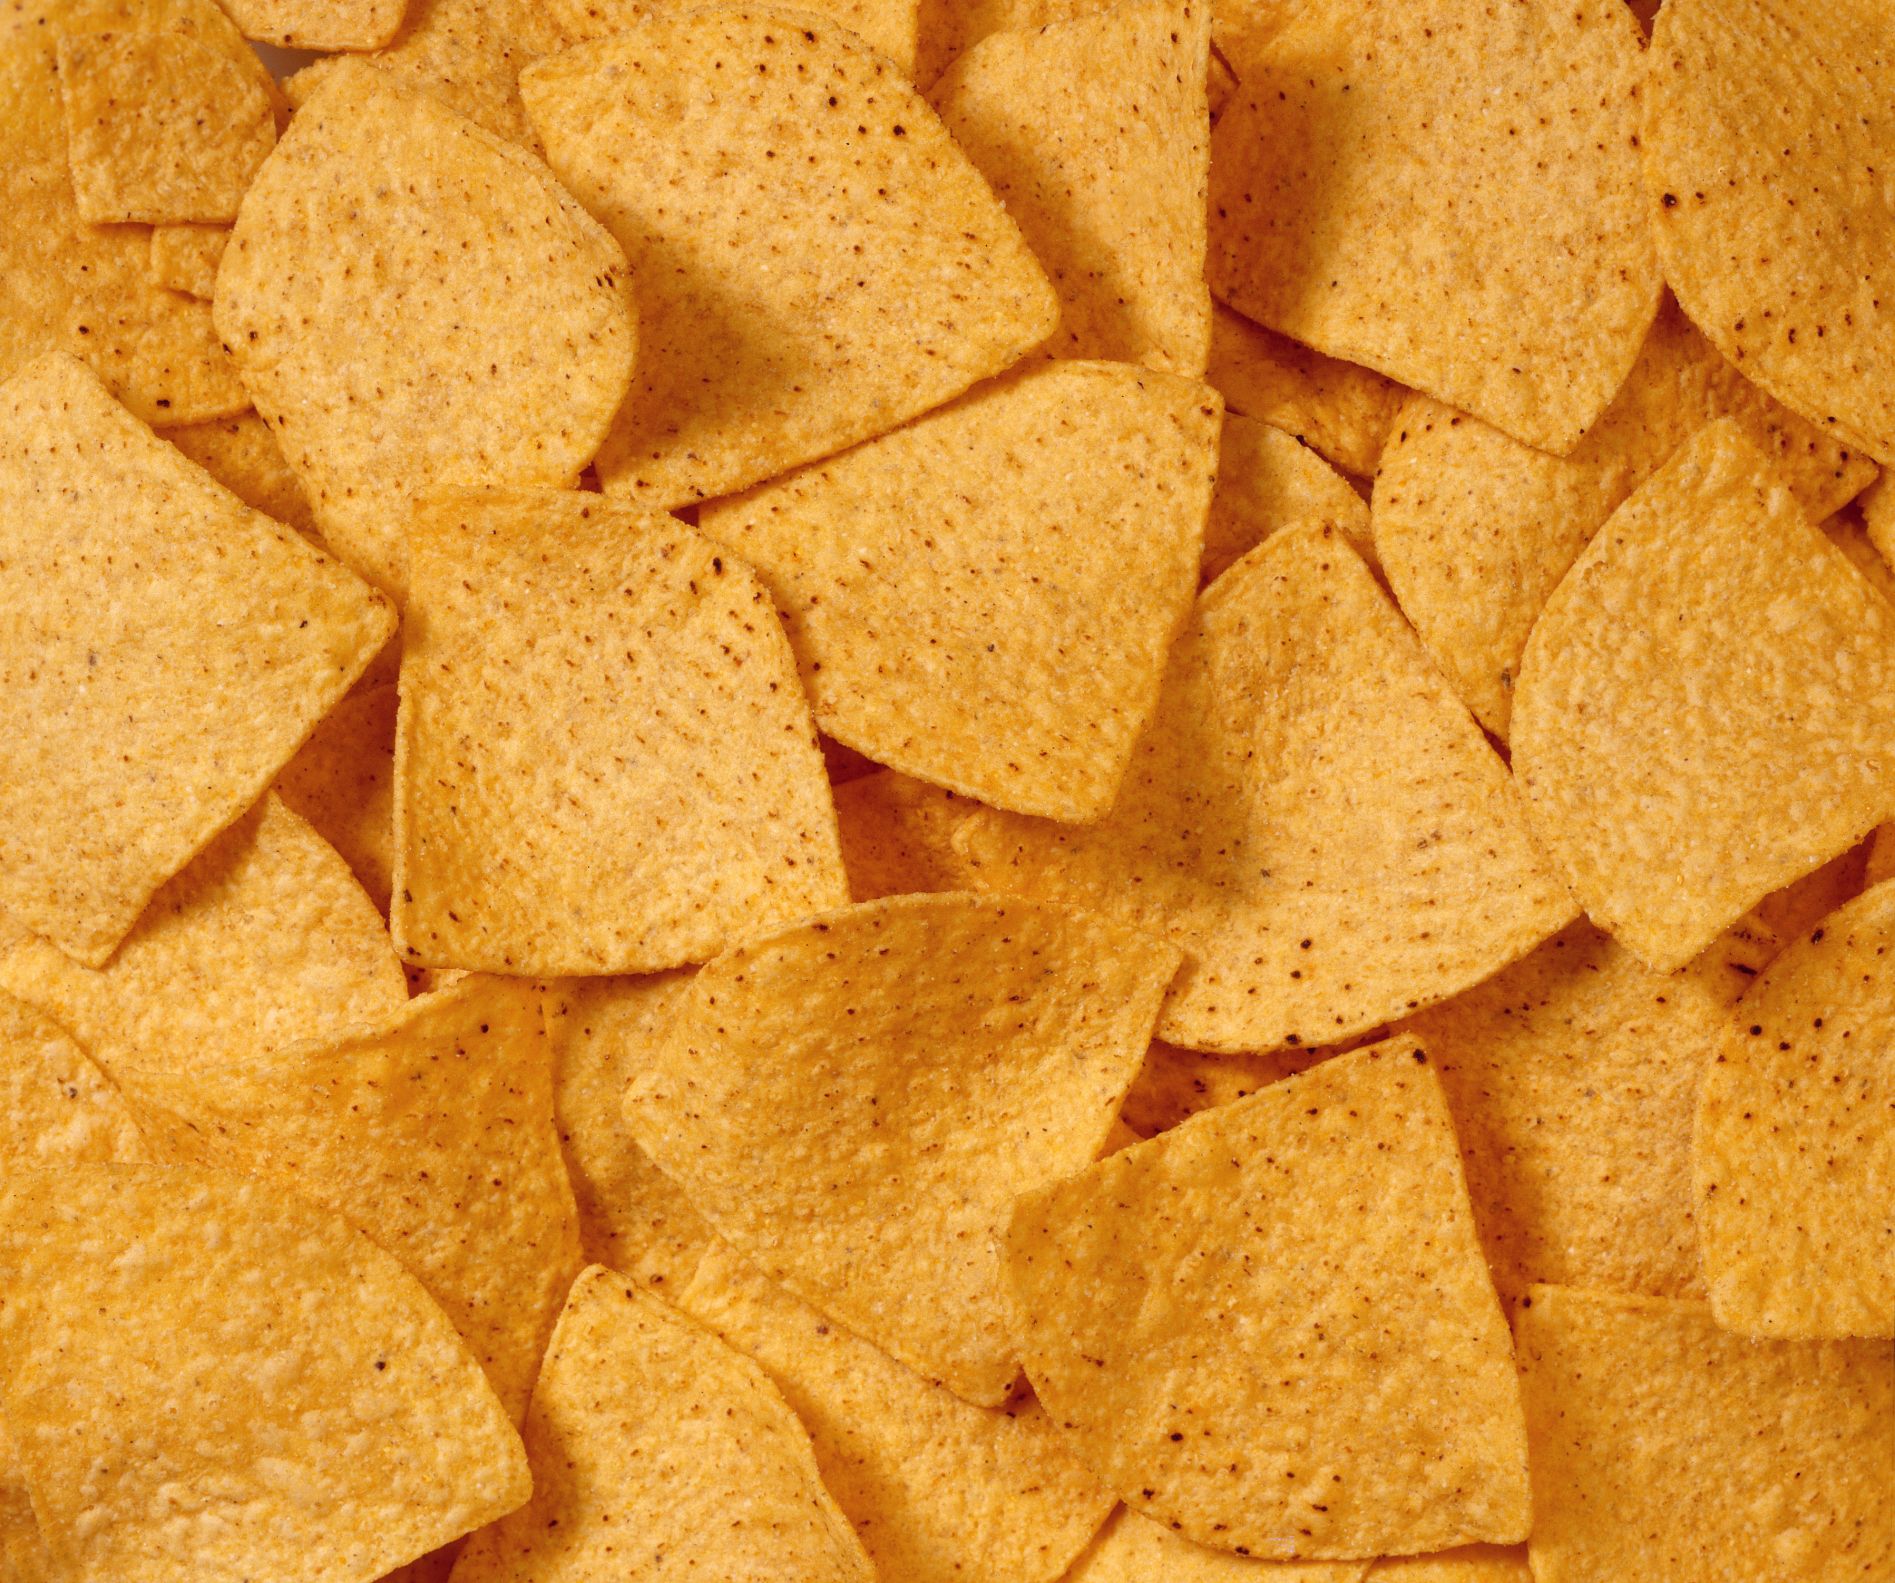 nacho chip brands